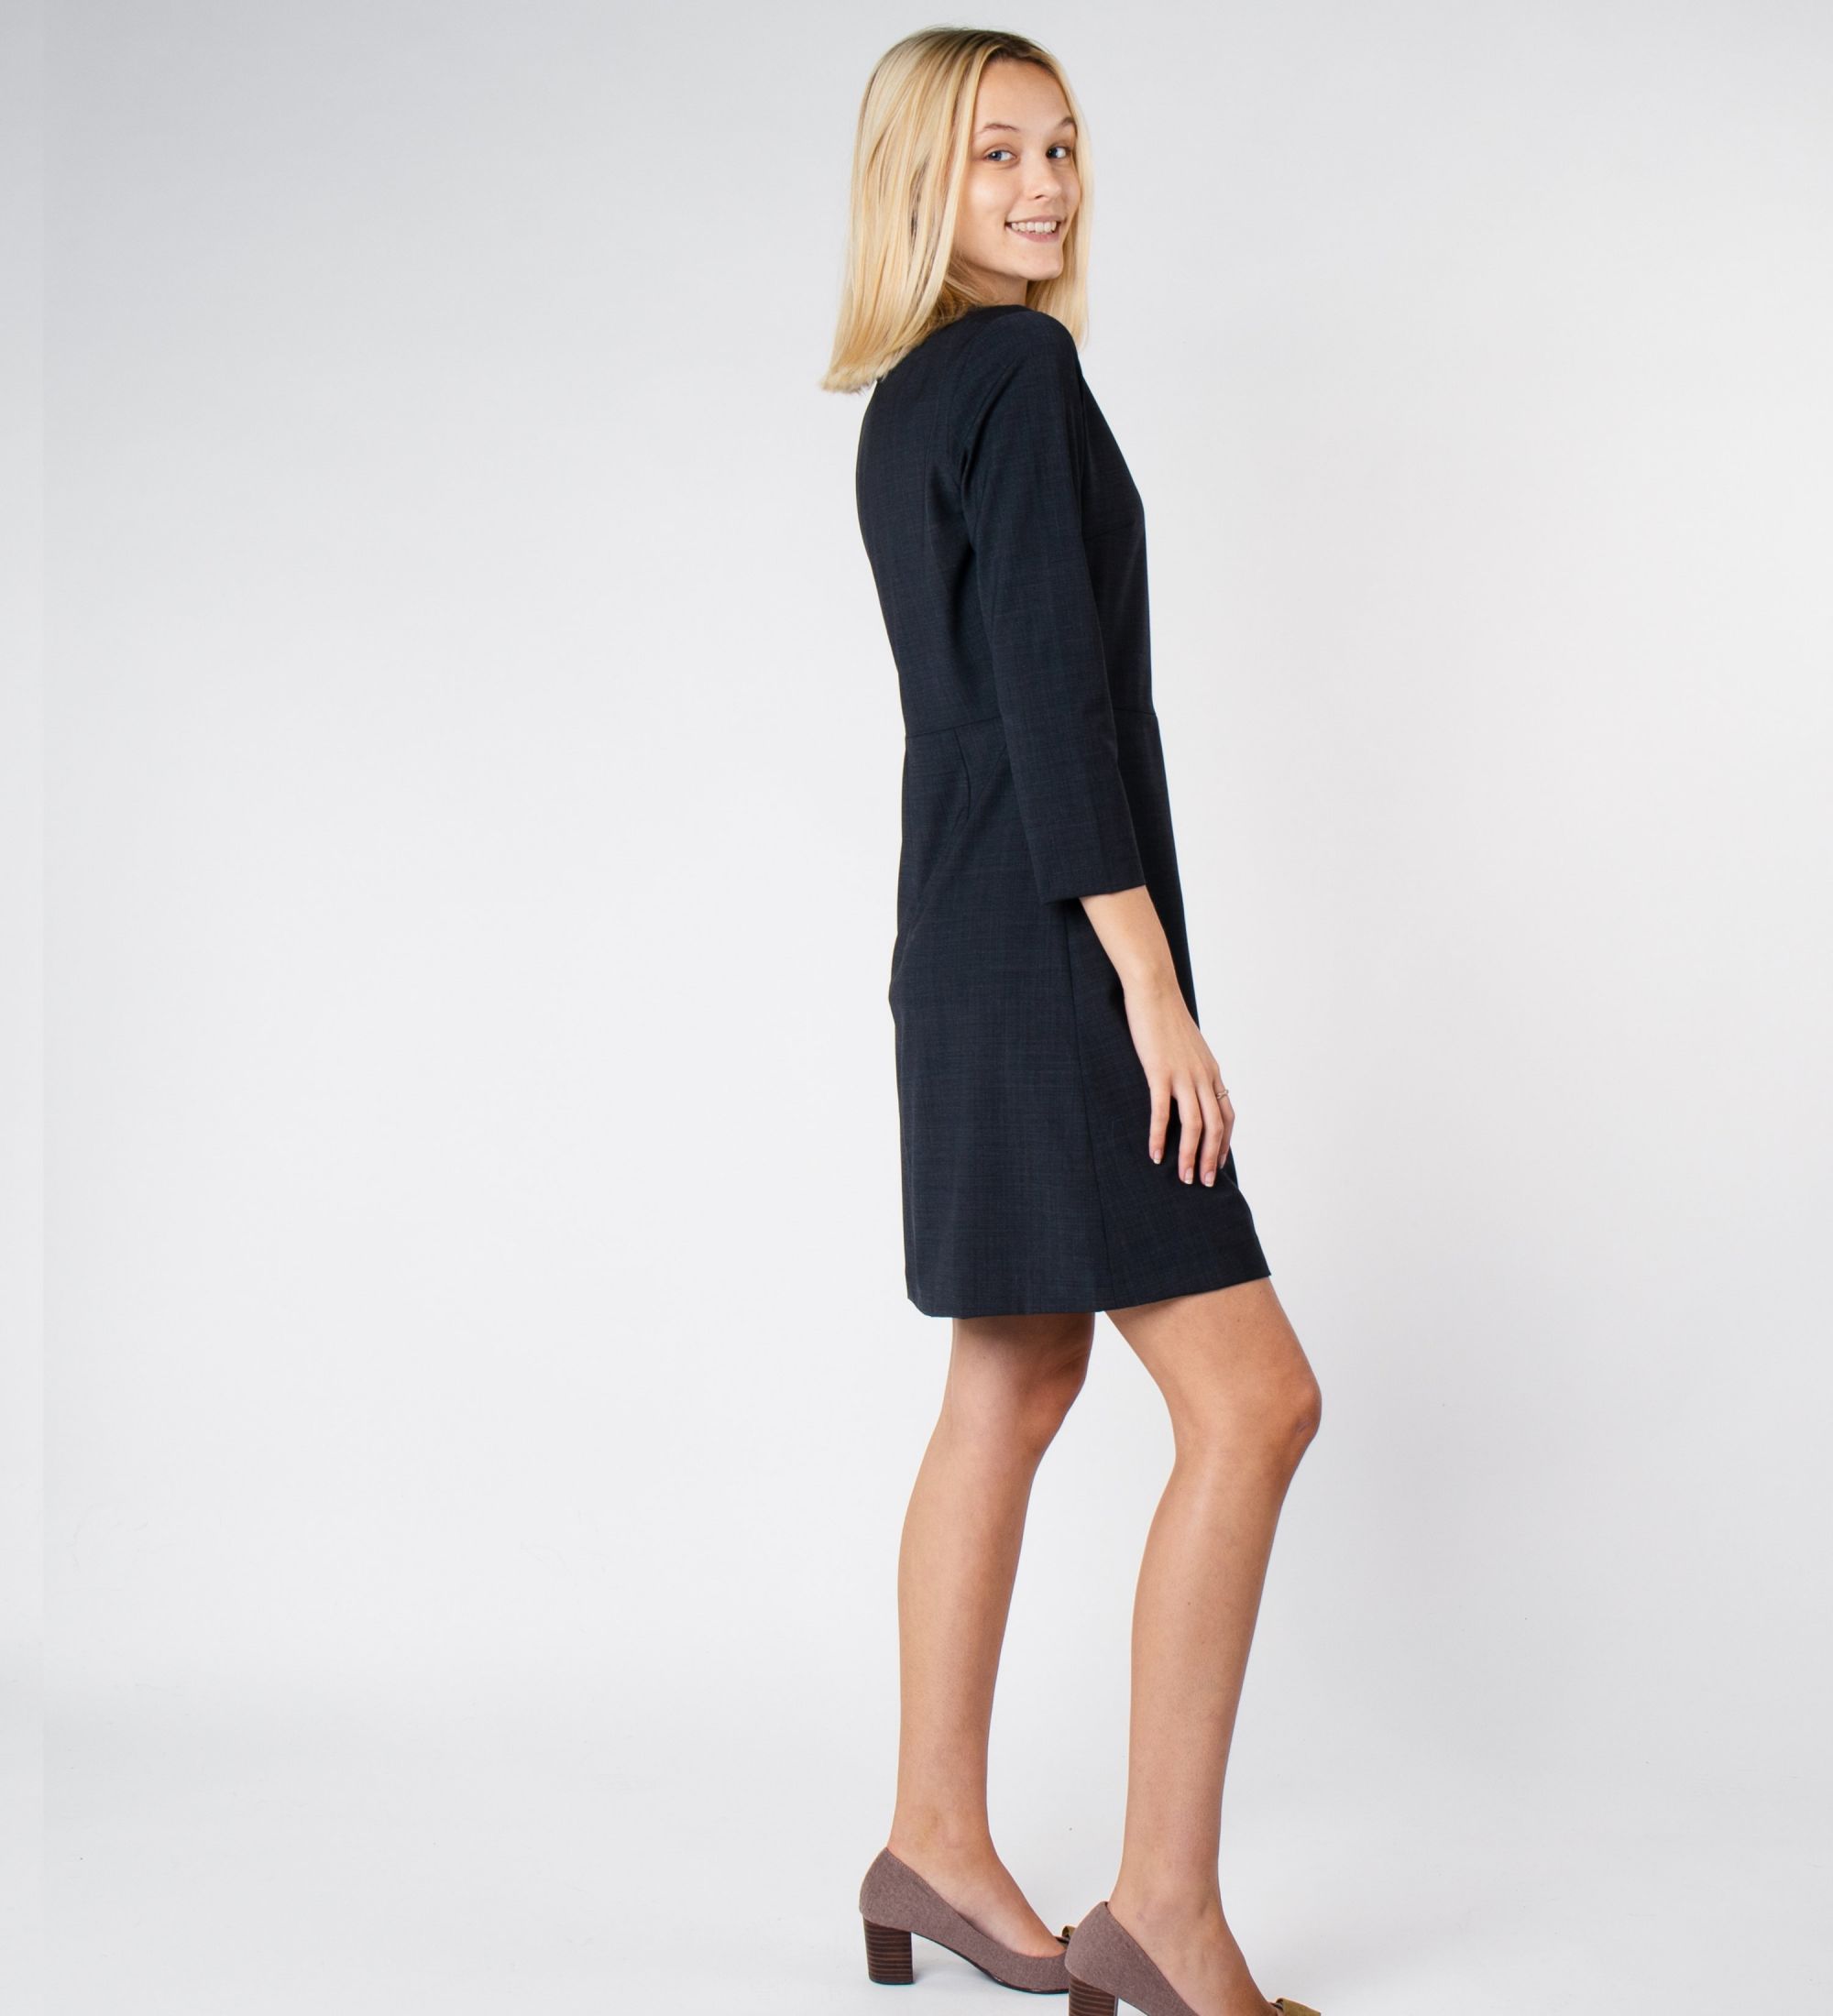 LEEZ Women Mid-thigh Length Wool Dress - Dark Grey